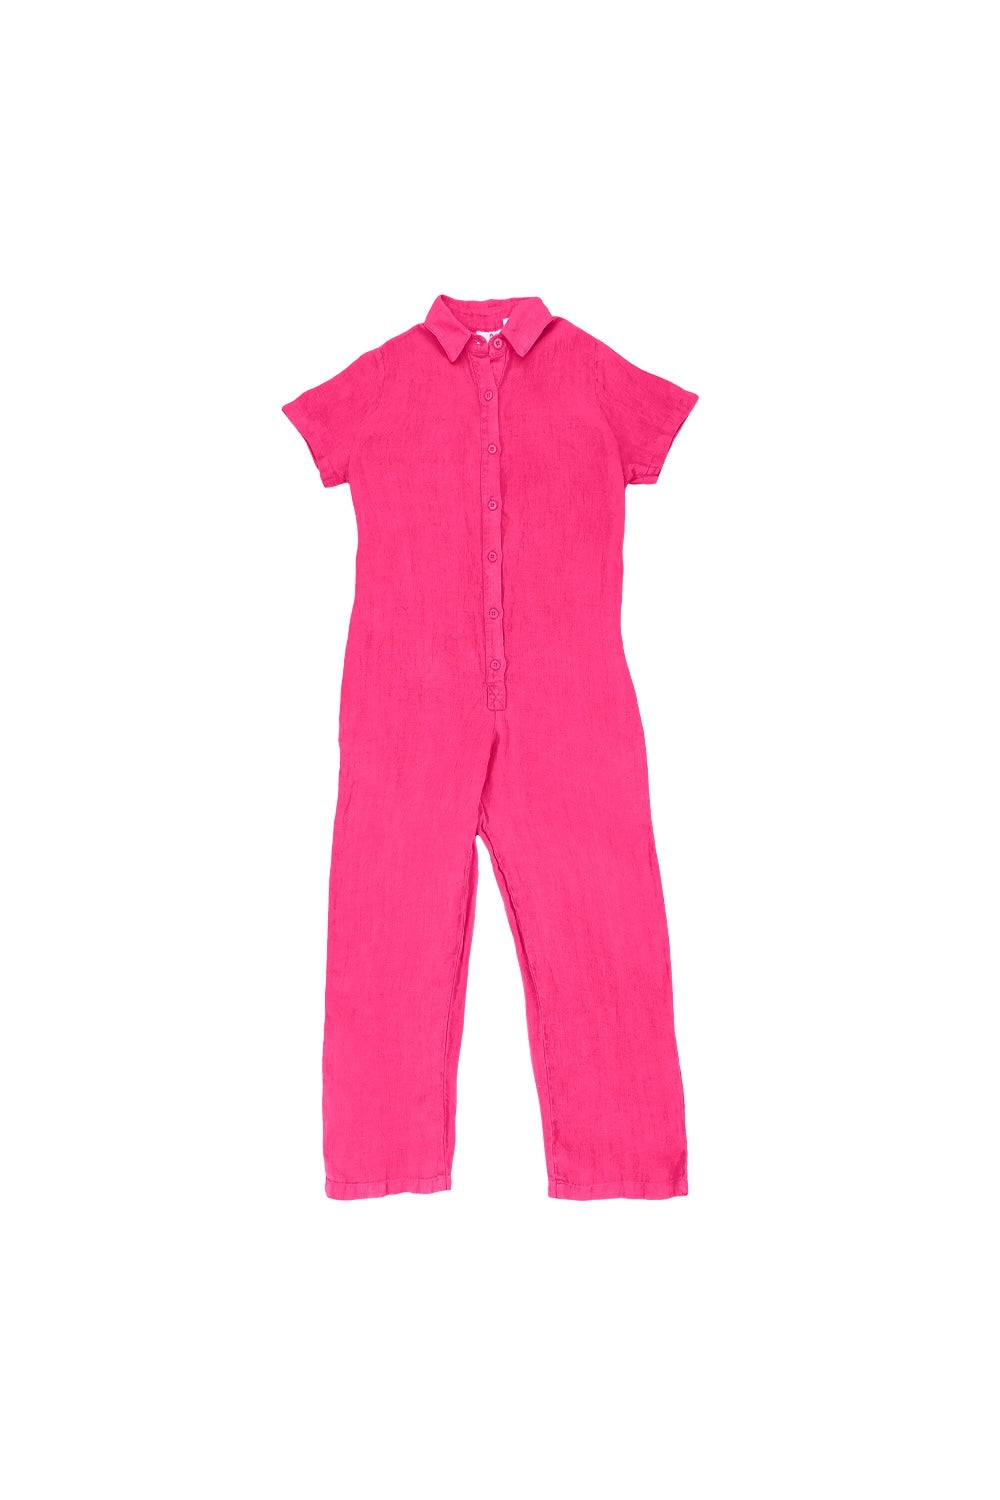 Stillwater Polo Pant Romper | Jungmaven Hemp Clothing & Accessories / Color: Pink Grapefruit